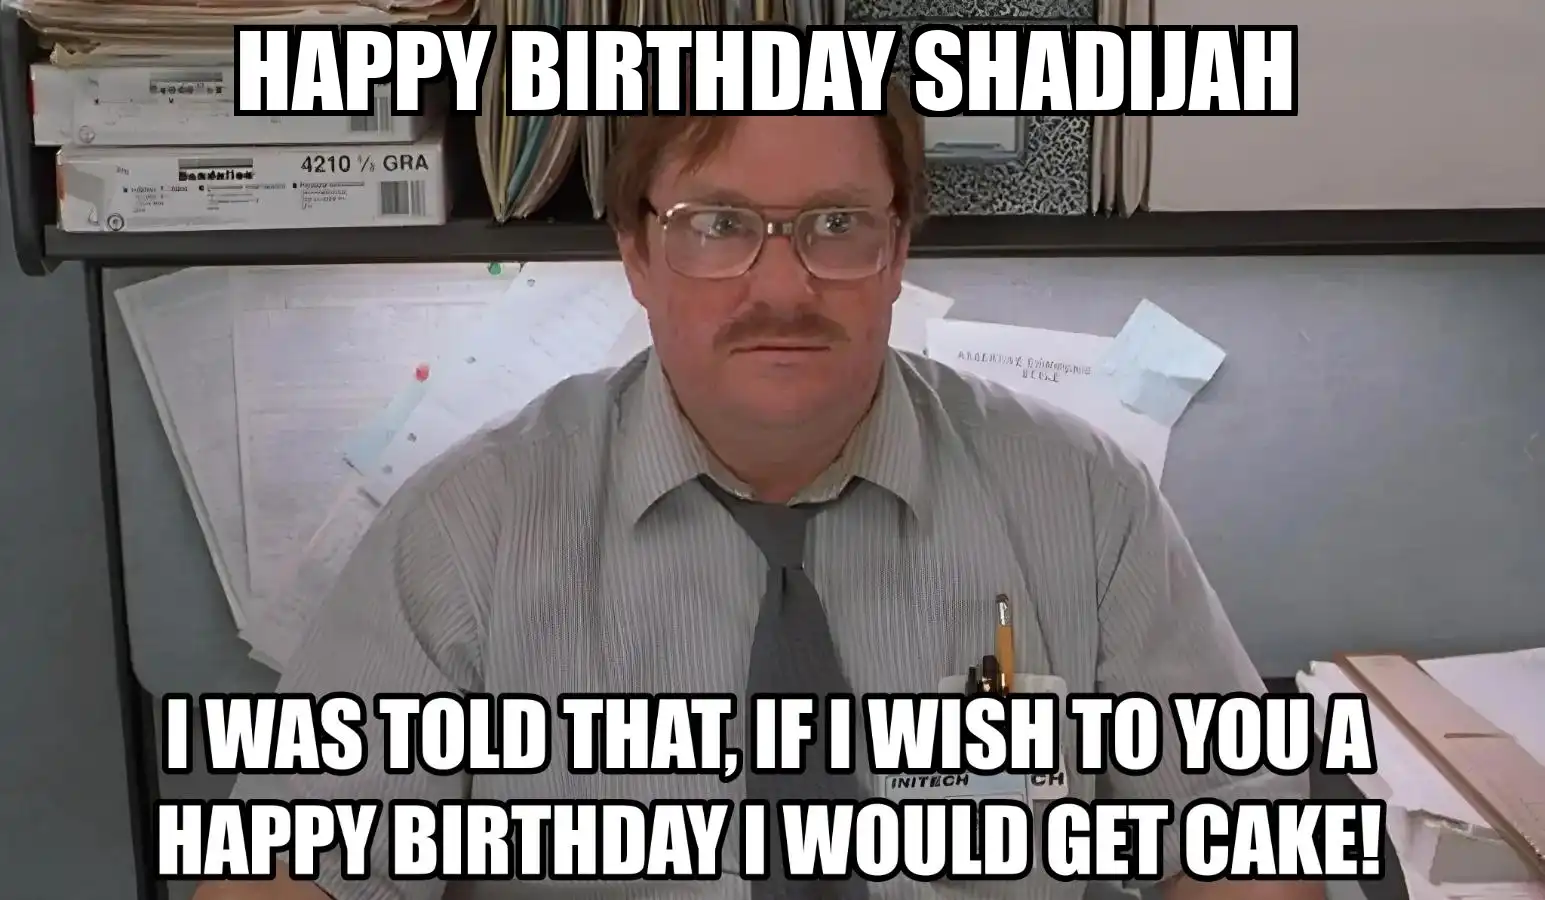 Happy Birthday Shadijah I Would Get A Cake Meme